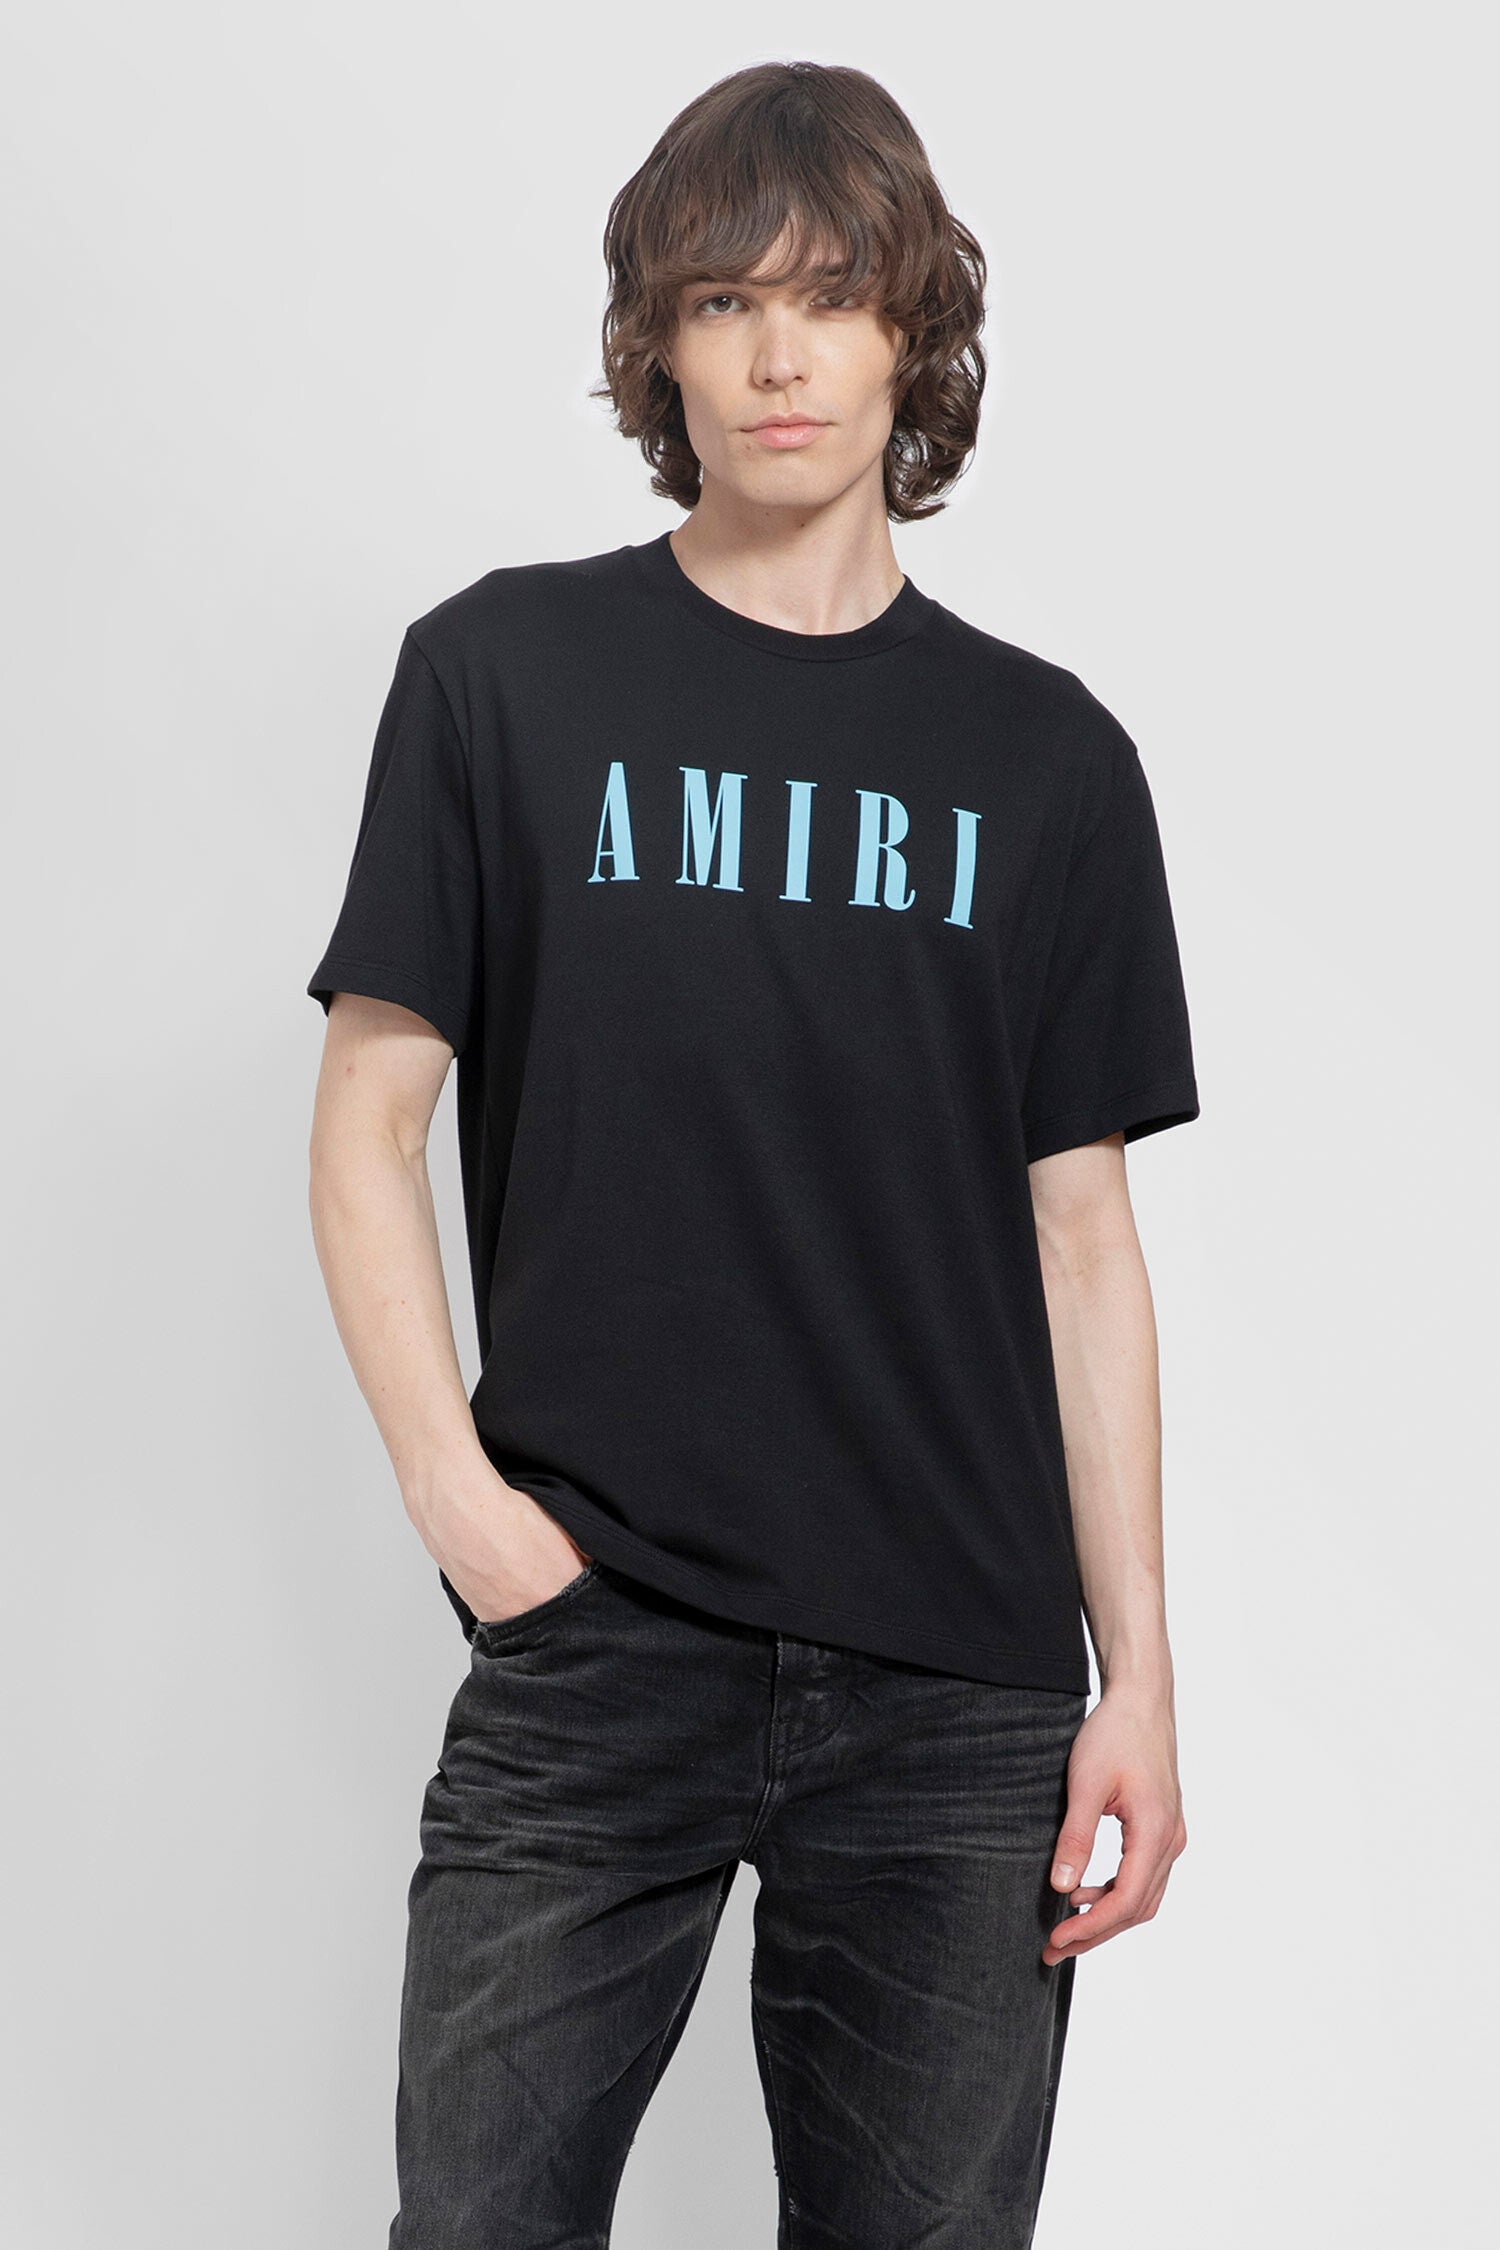 AMIRI MAN BLACK T-SHIRTS